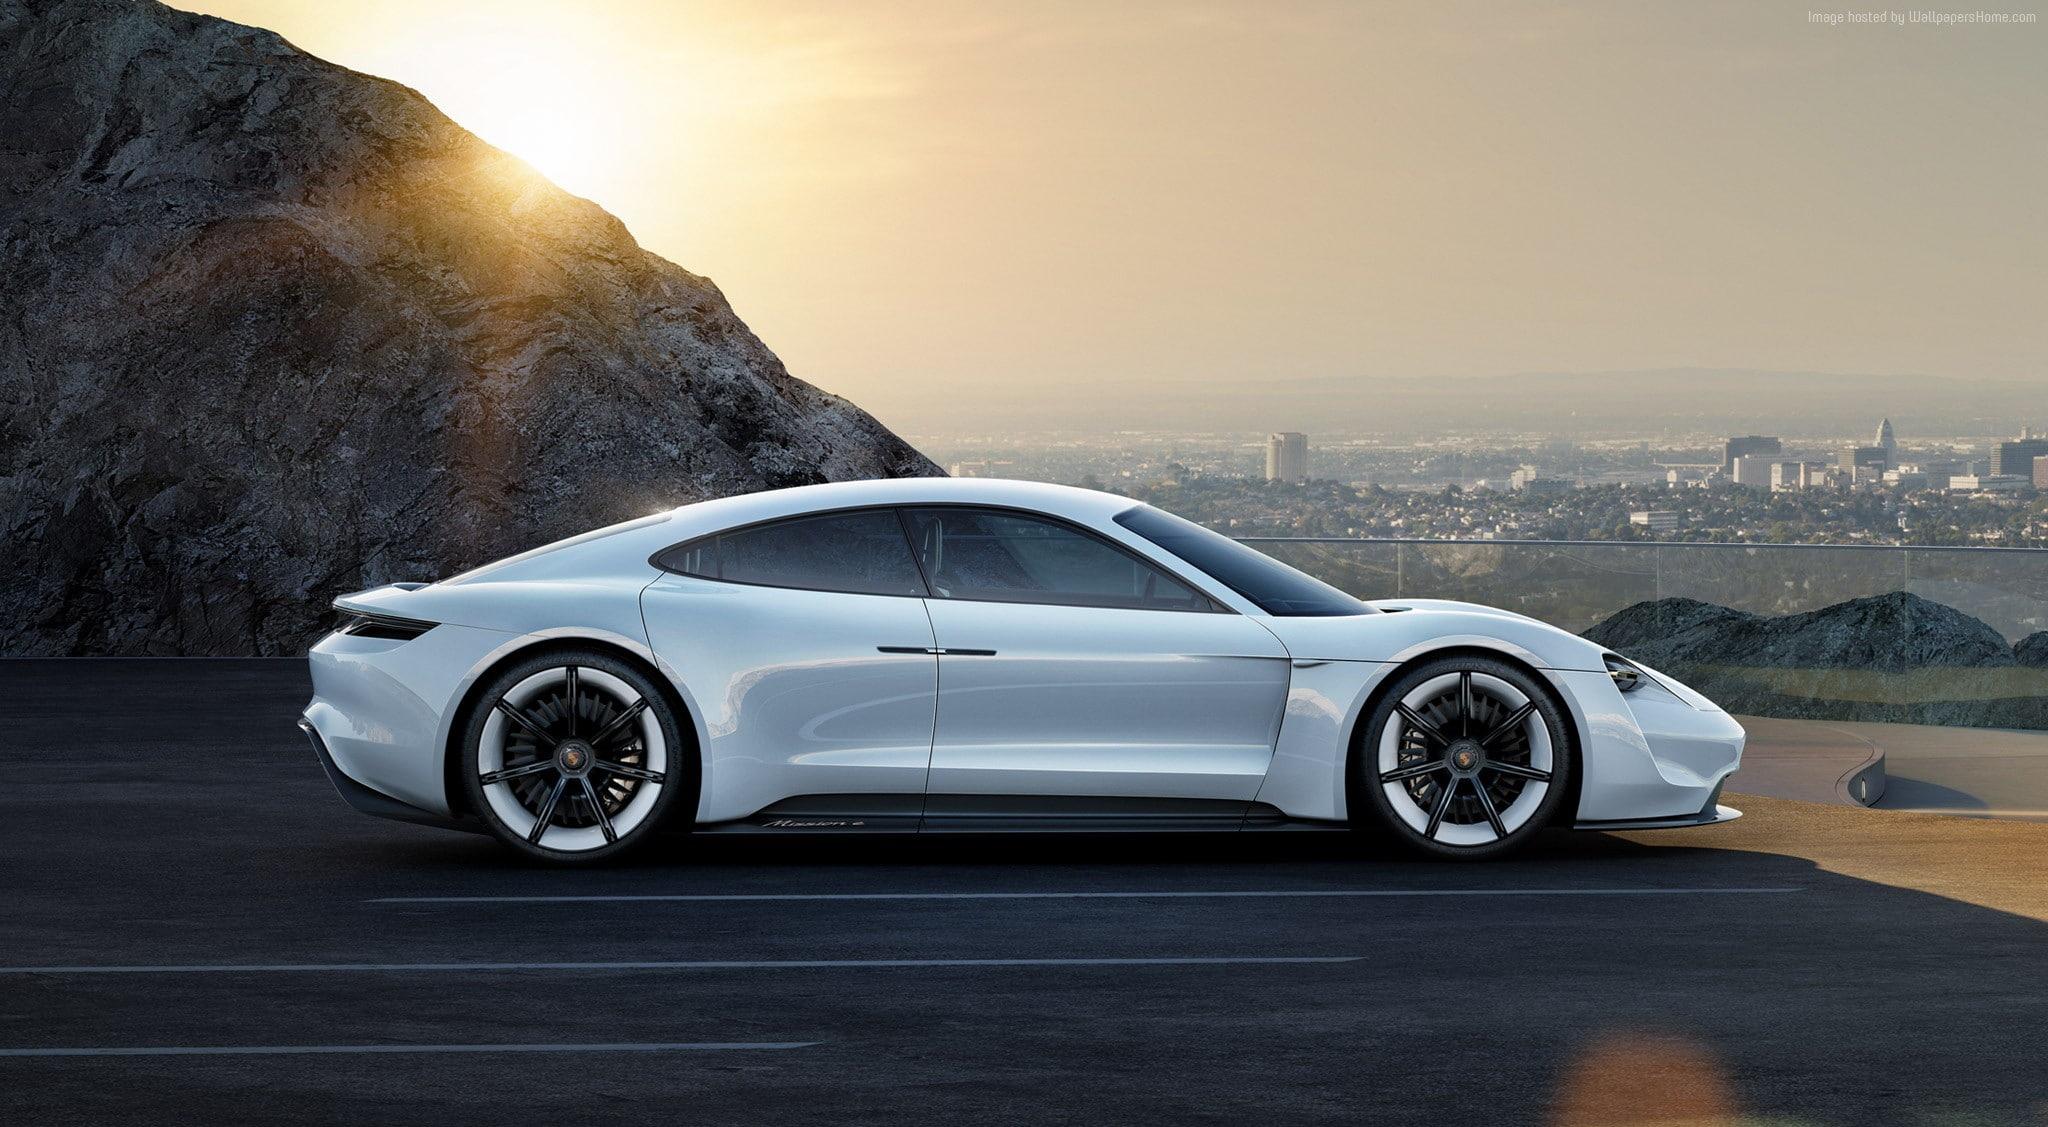 HD wallpaper: Electric Car, supercar, 4K, 2020 Cars, Porsche Taycan